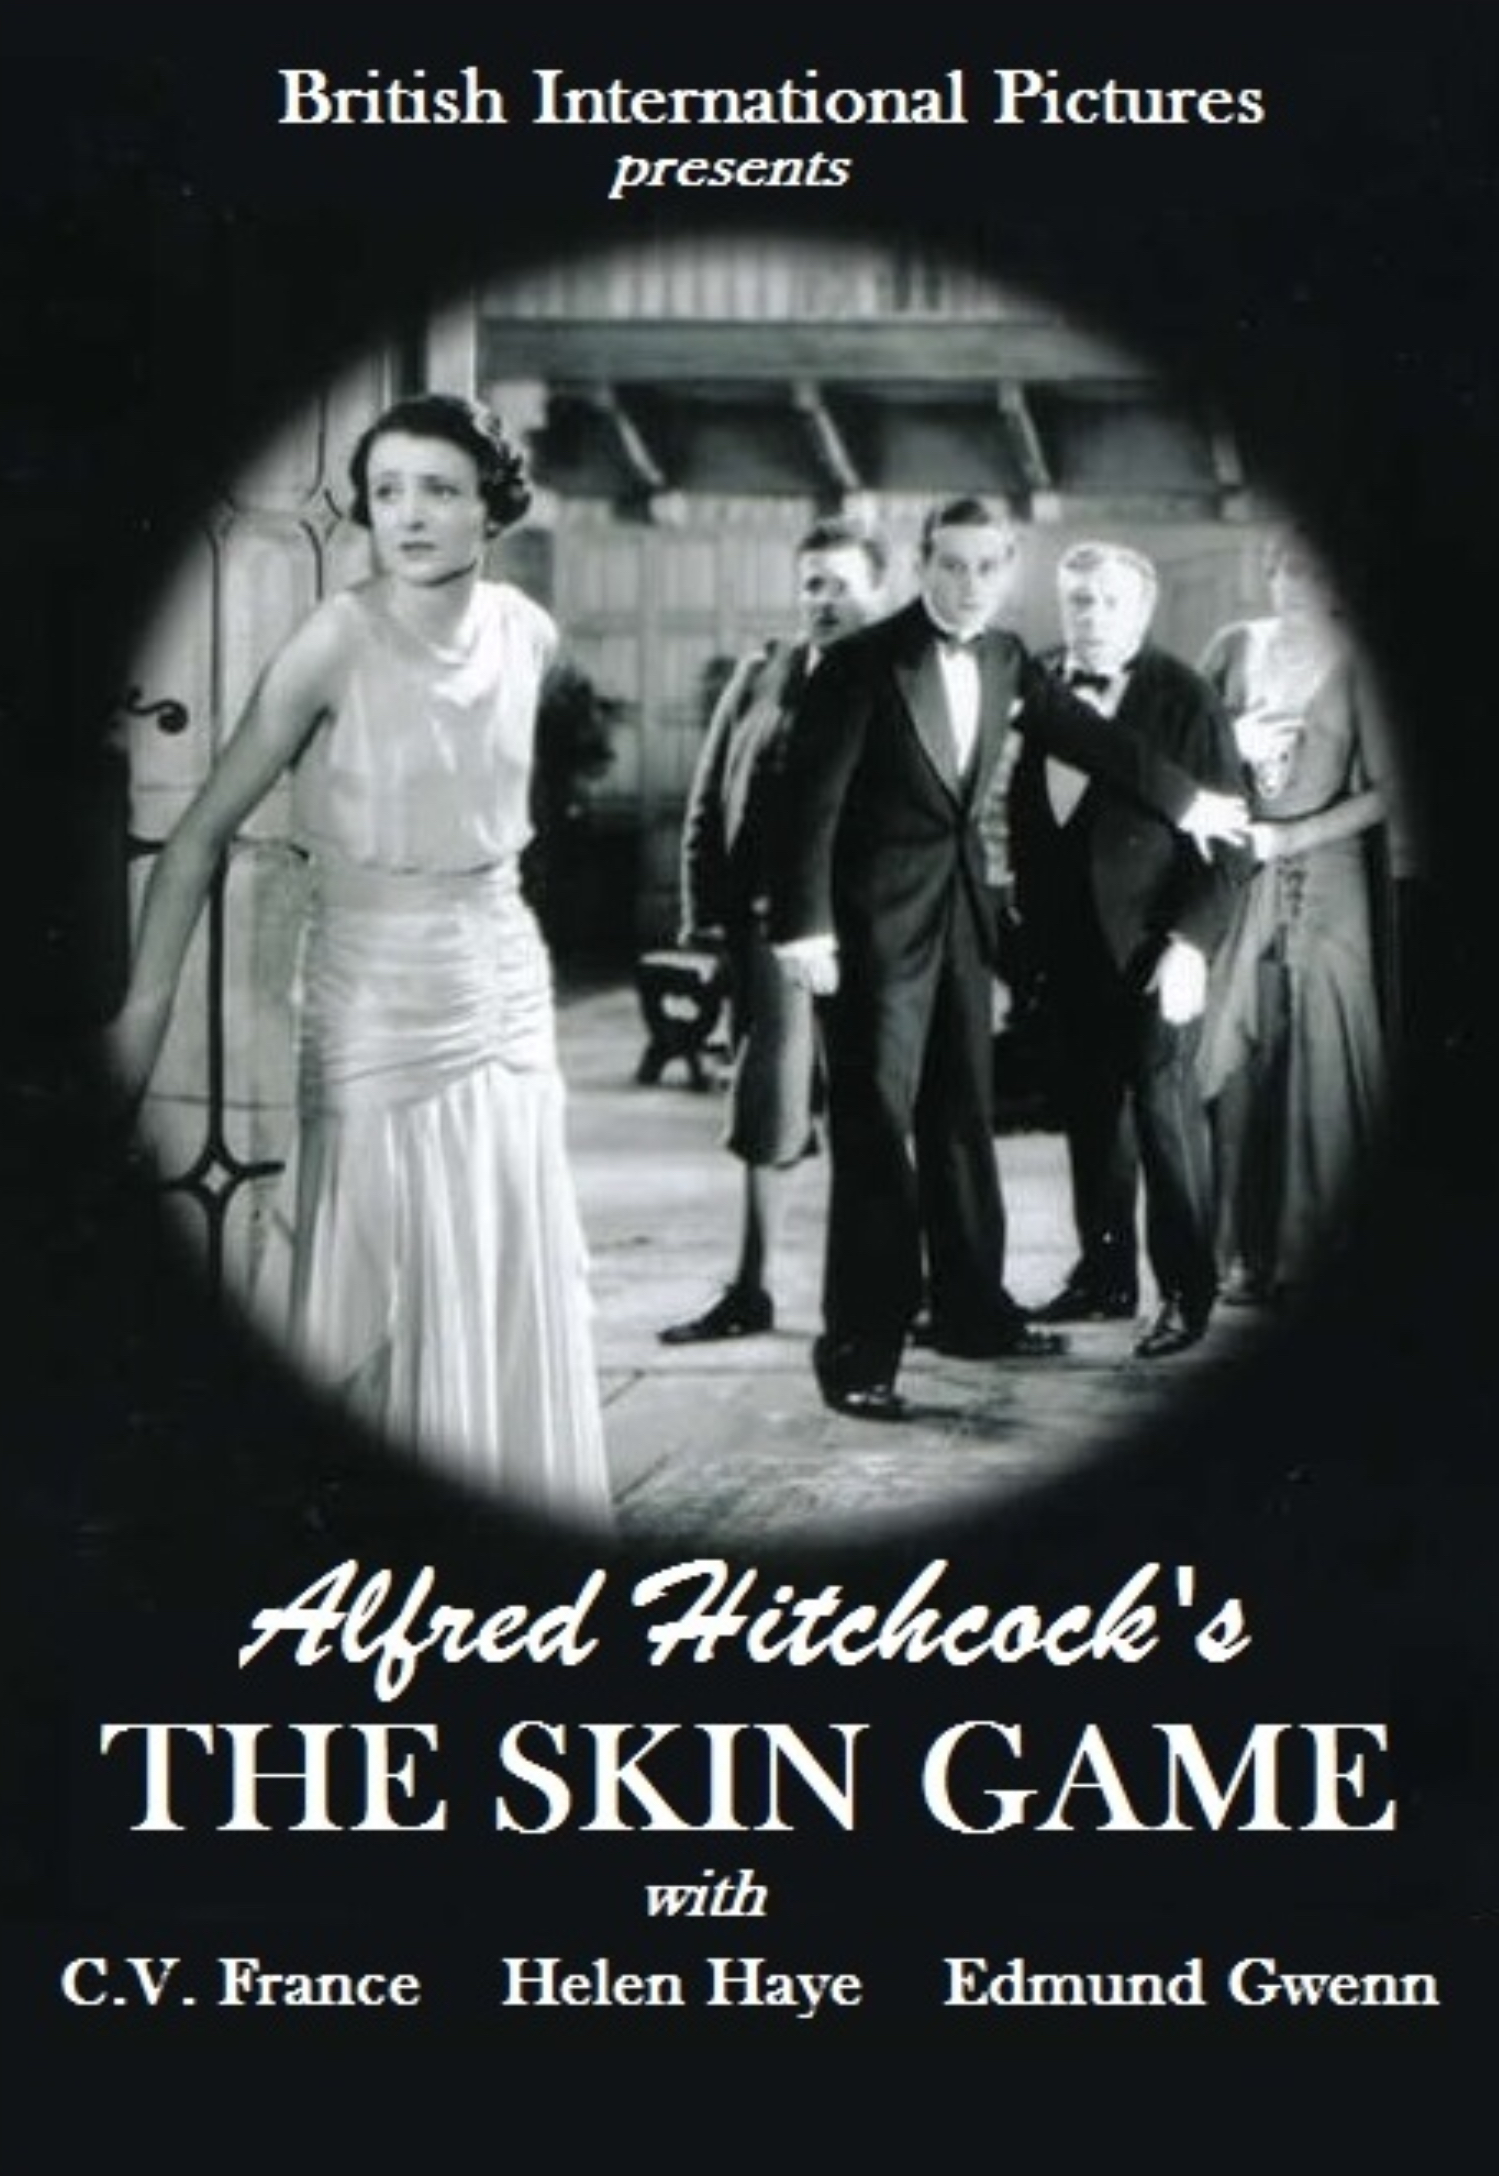 The Skin Game [1931]